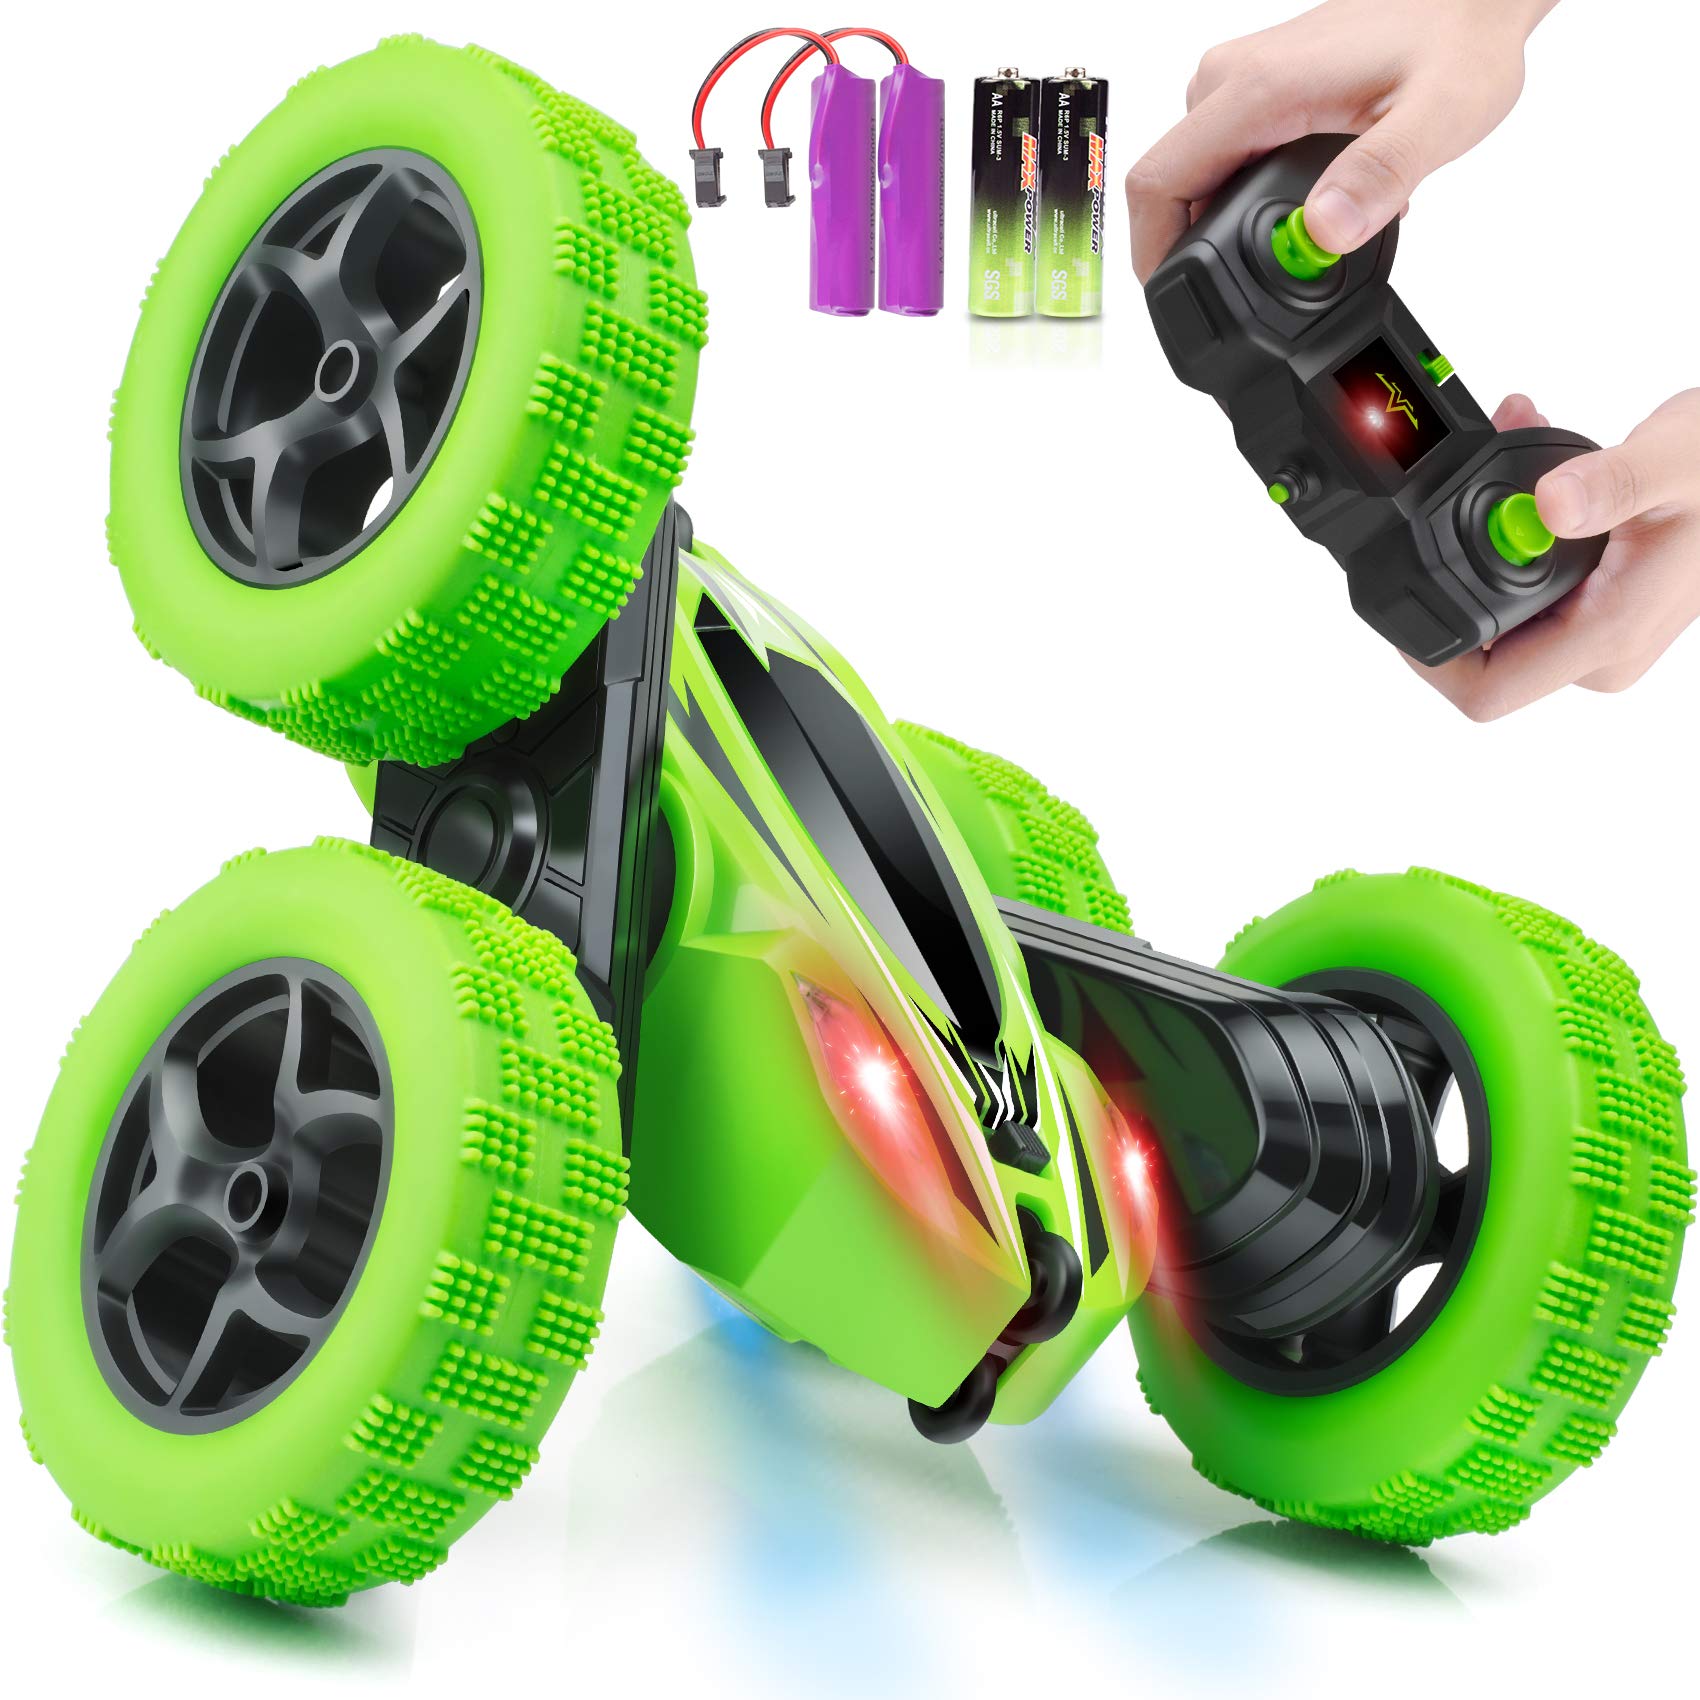 Mua Remote Control Car, ORRENTE RC Cars Stunt Car Toy, 4WD  Double  Sided 360° Rotating RC Car with Headlights, Kids Xmas Toy Cars for  Boys/Girls (Green) trên Amazon Mỹ chính hãng